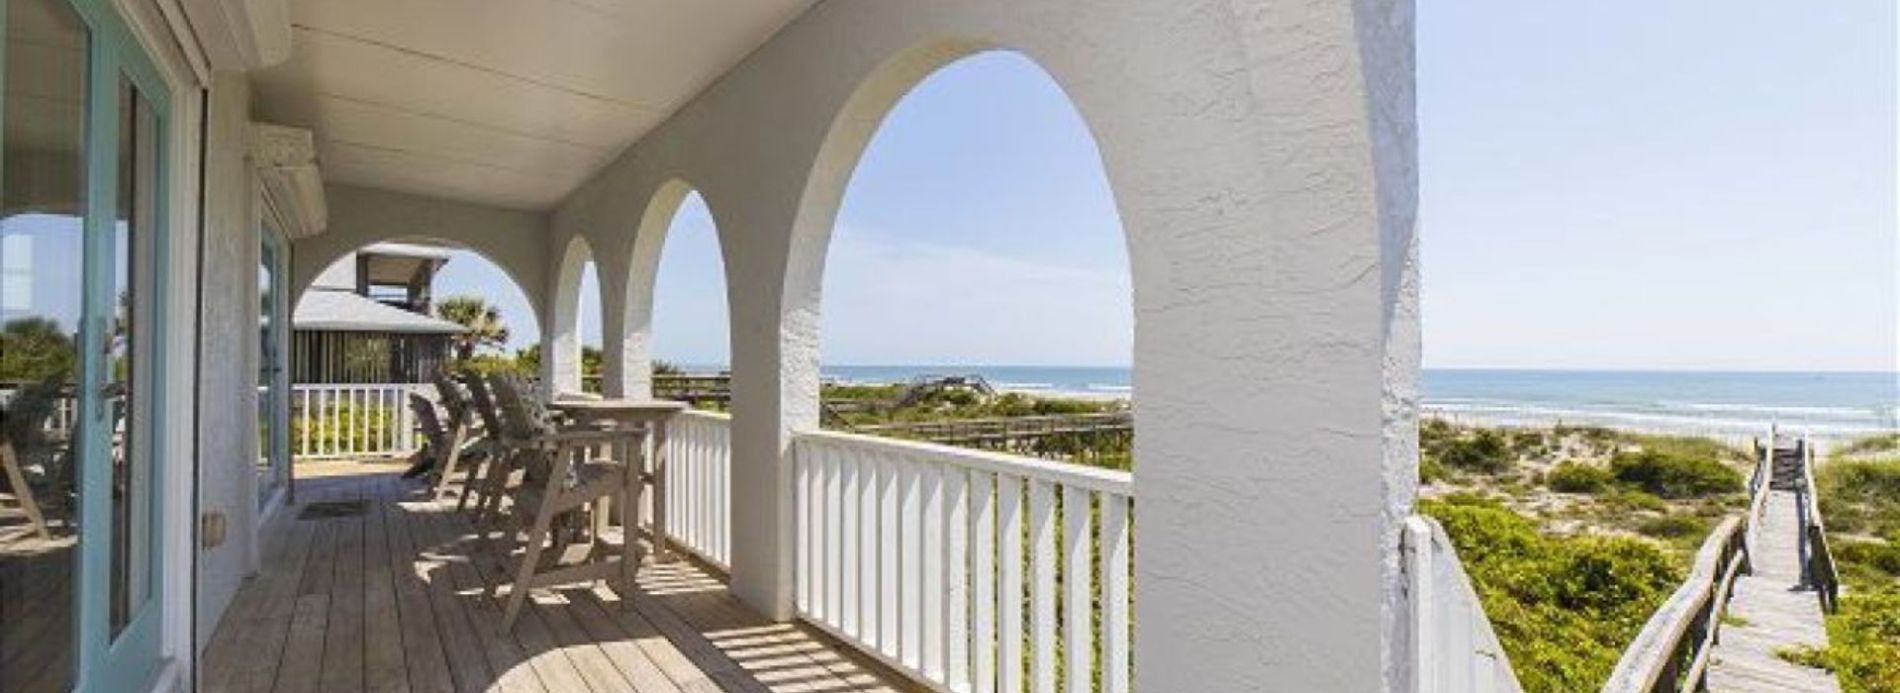 Beachfront Hideaway wraparound porch overlooking ocean